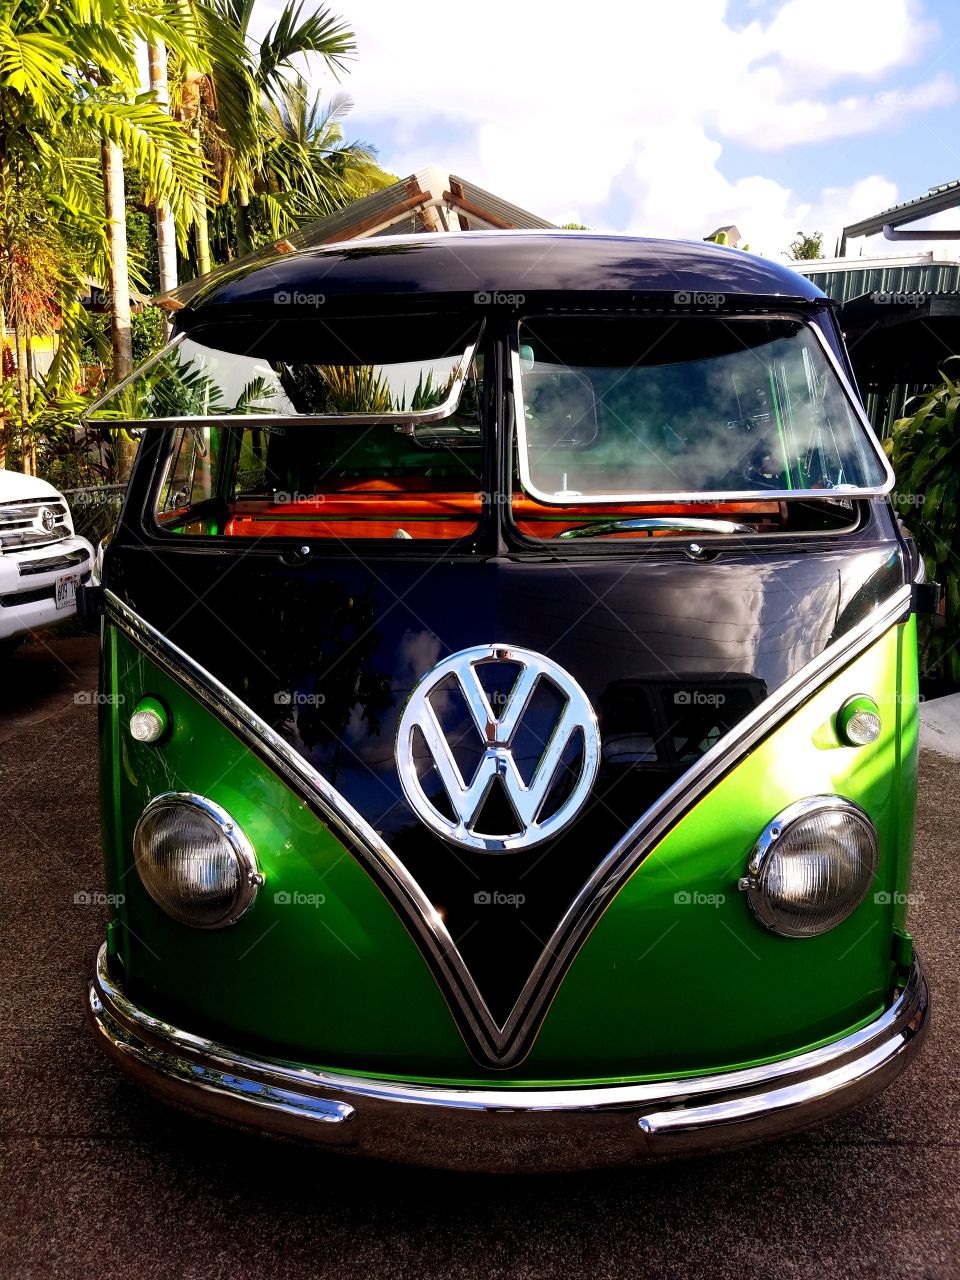 1964 Volkswagen extended cab pick up truck restored so beautifully with Hawaiian Koa                                wood. Big Island small world